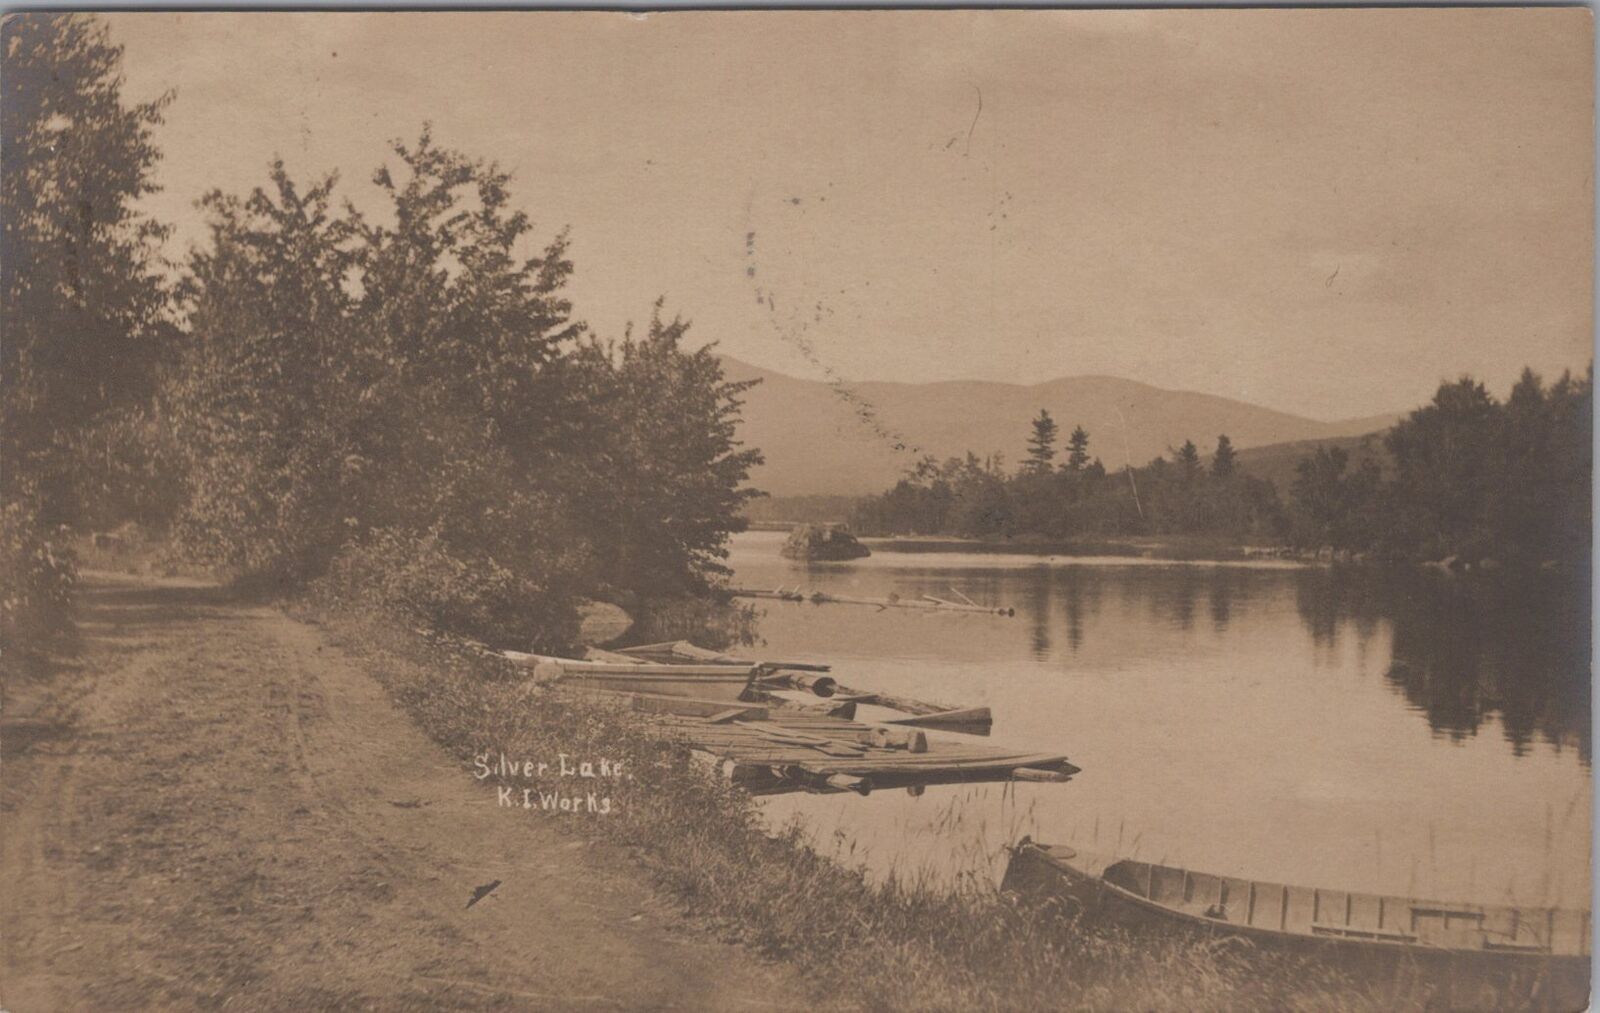 Silver Lake K.I. Katahdin Iron Works Dirt Road Logs Boat 1907 RPPC Postcard